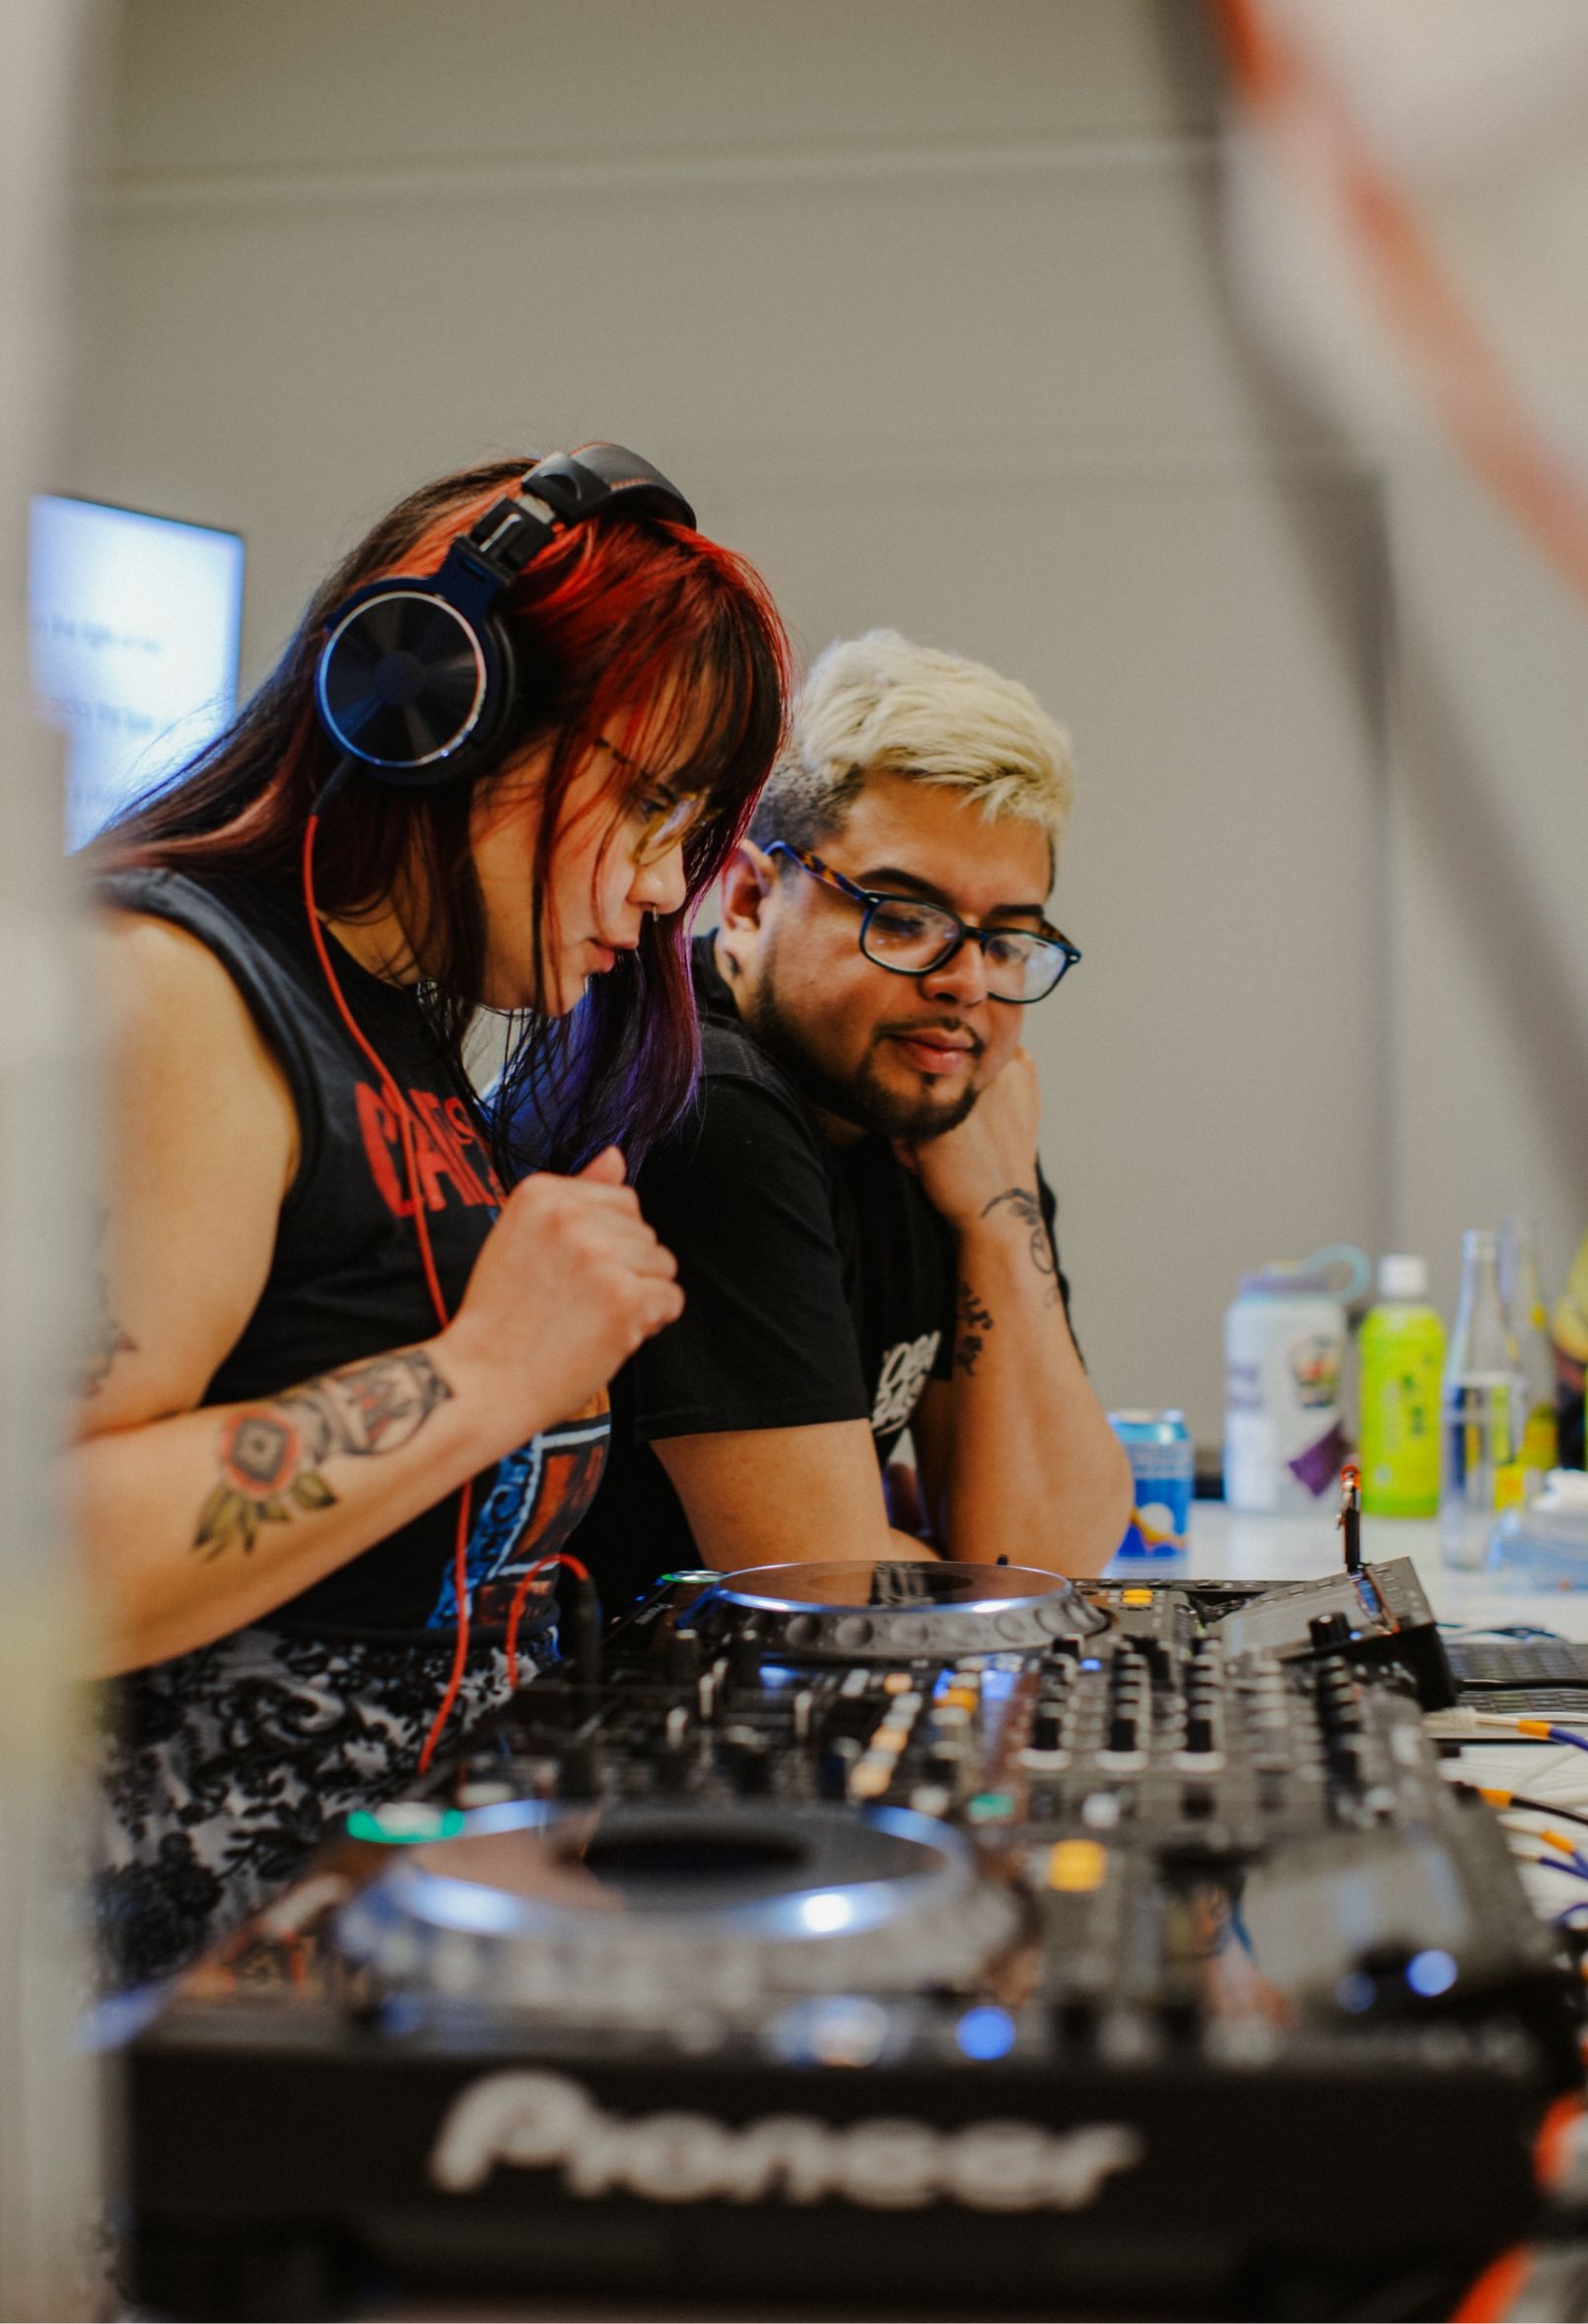 2 people behind DJ mixer set up